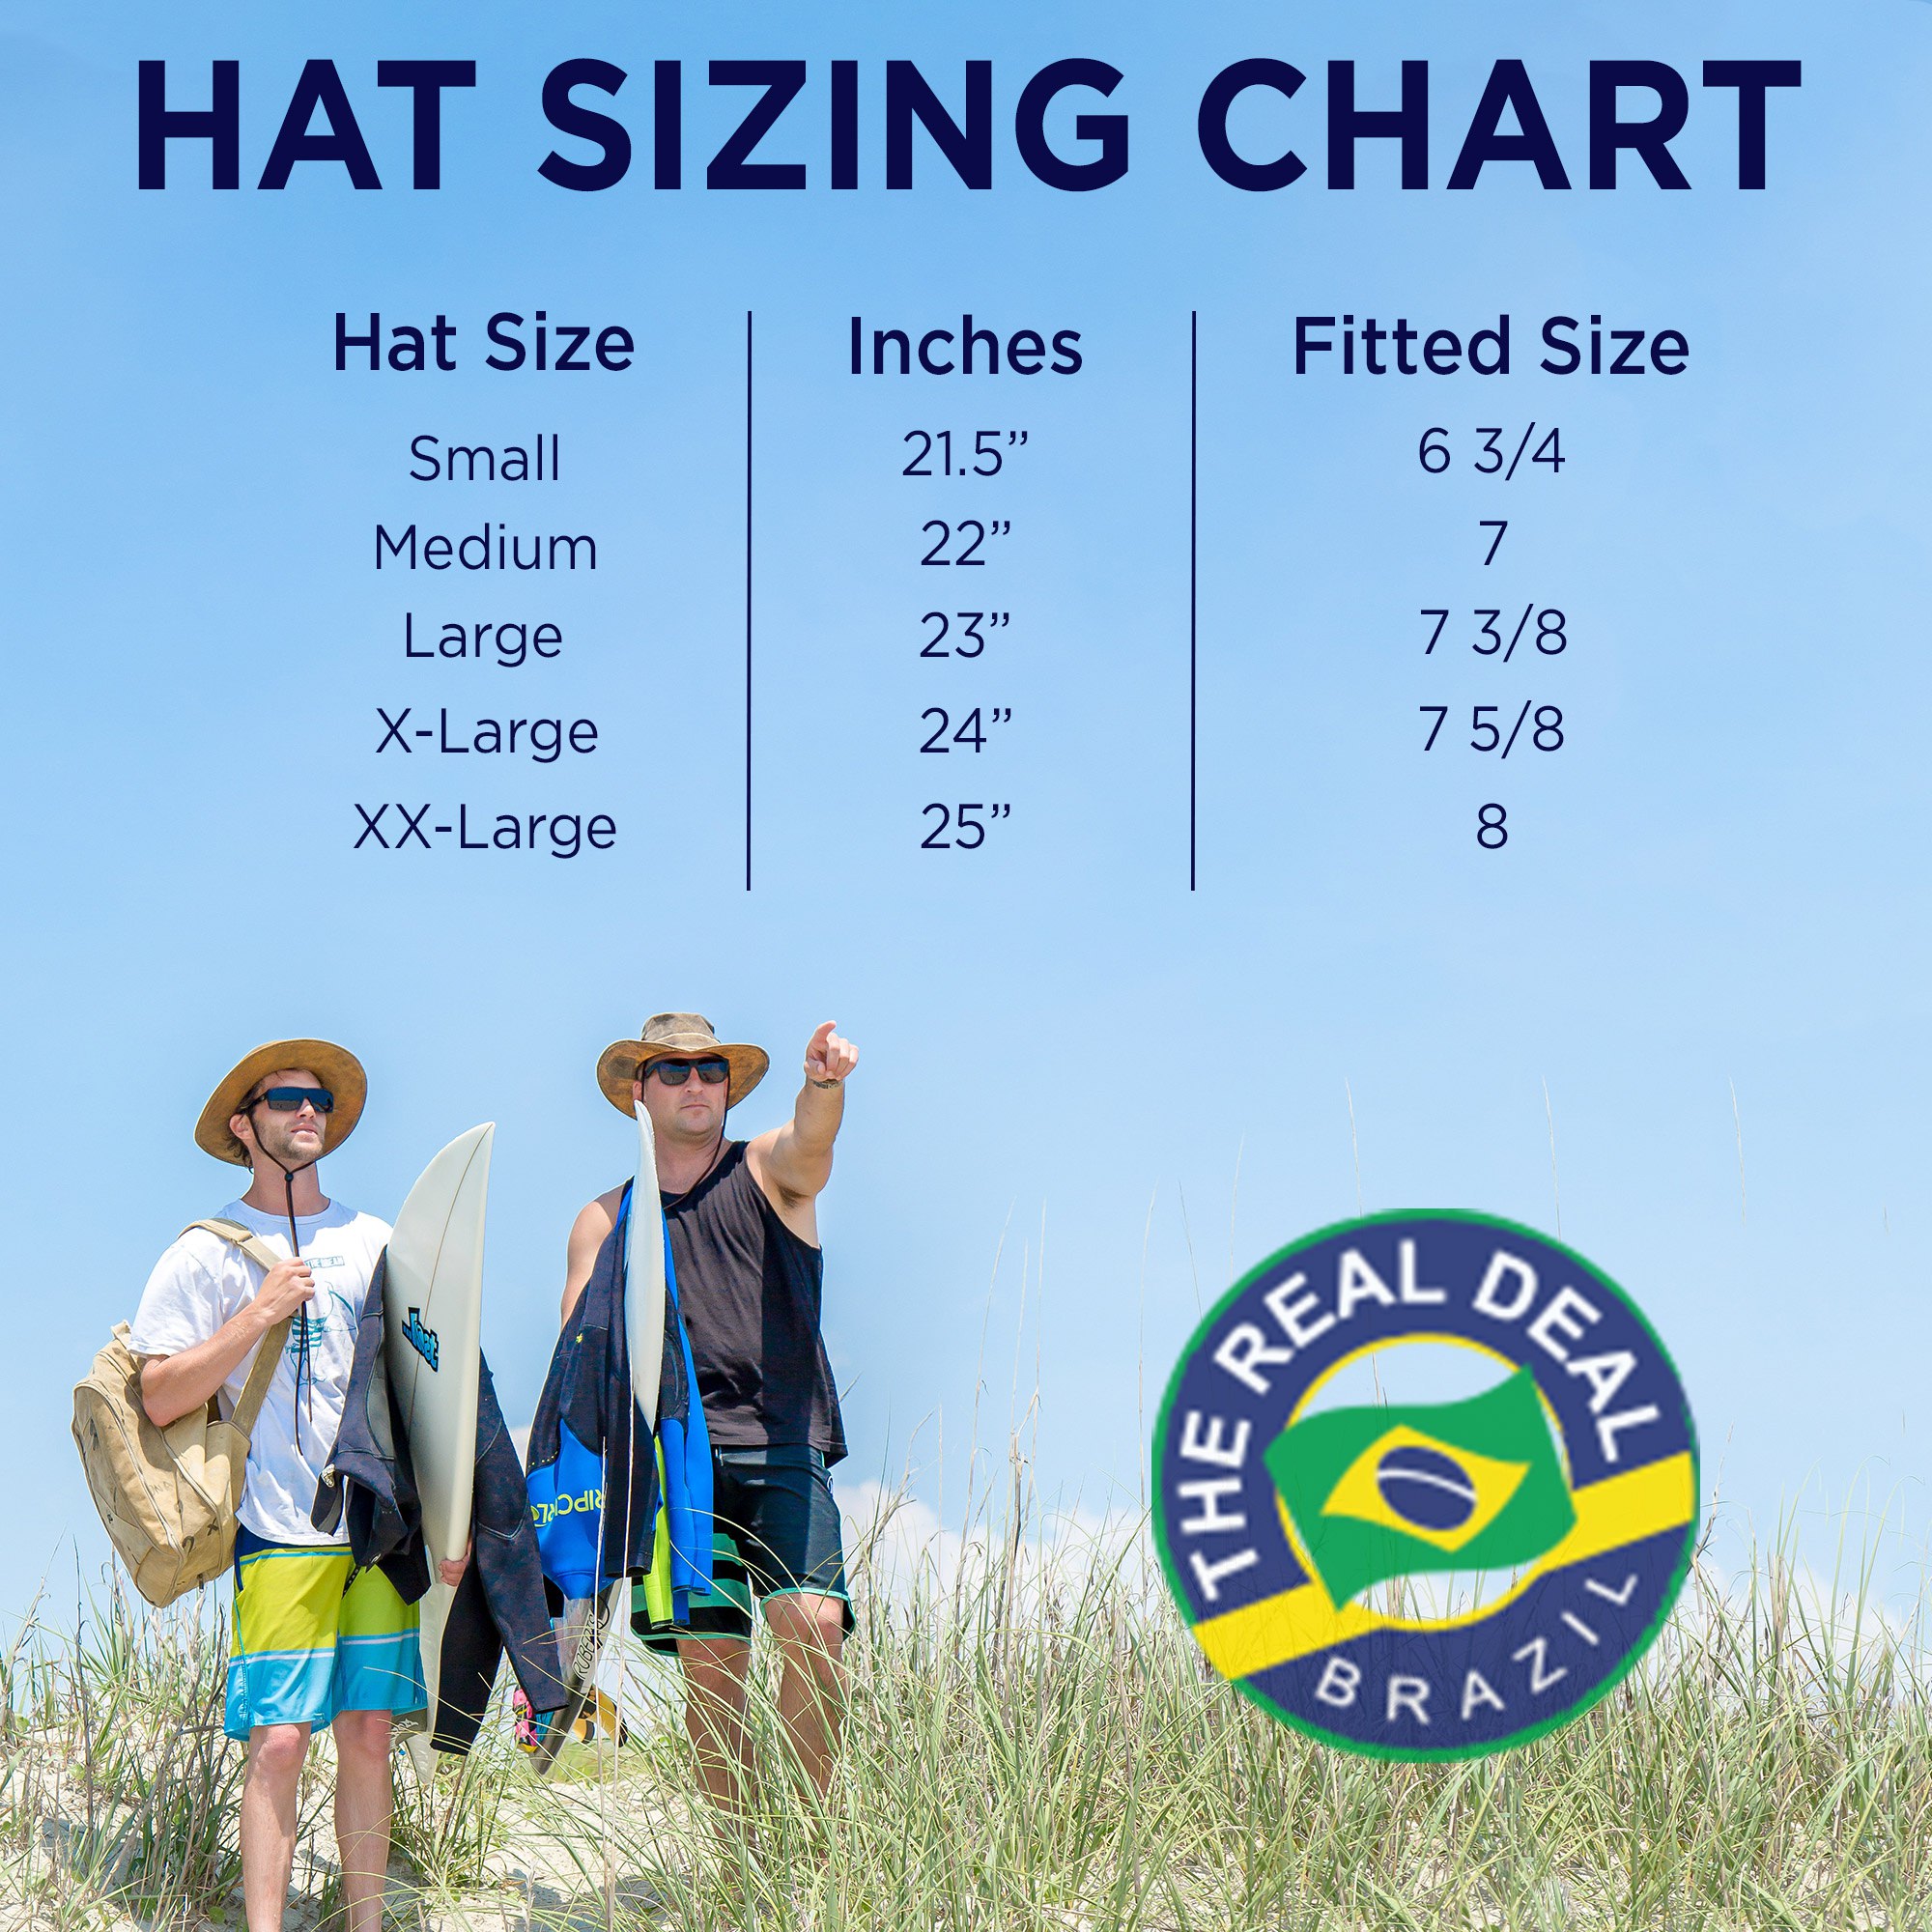 Real Deal Brazil tarp hat : r/hats